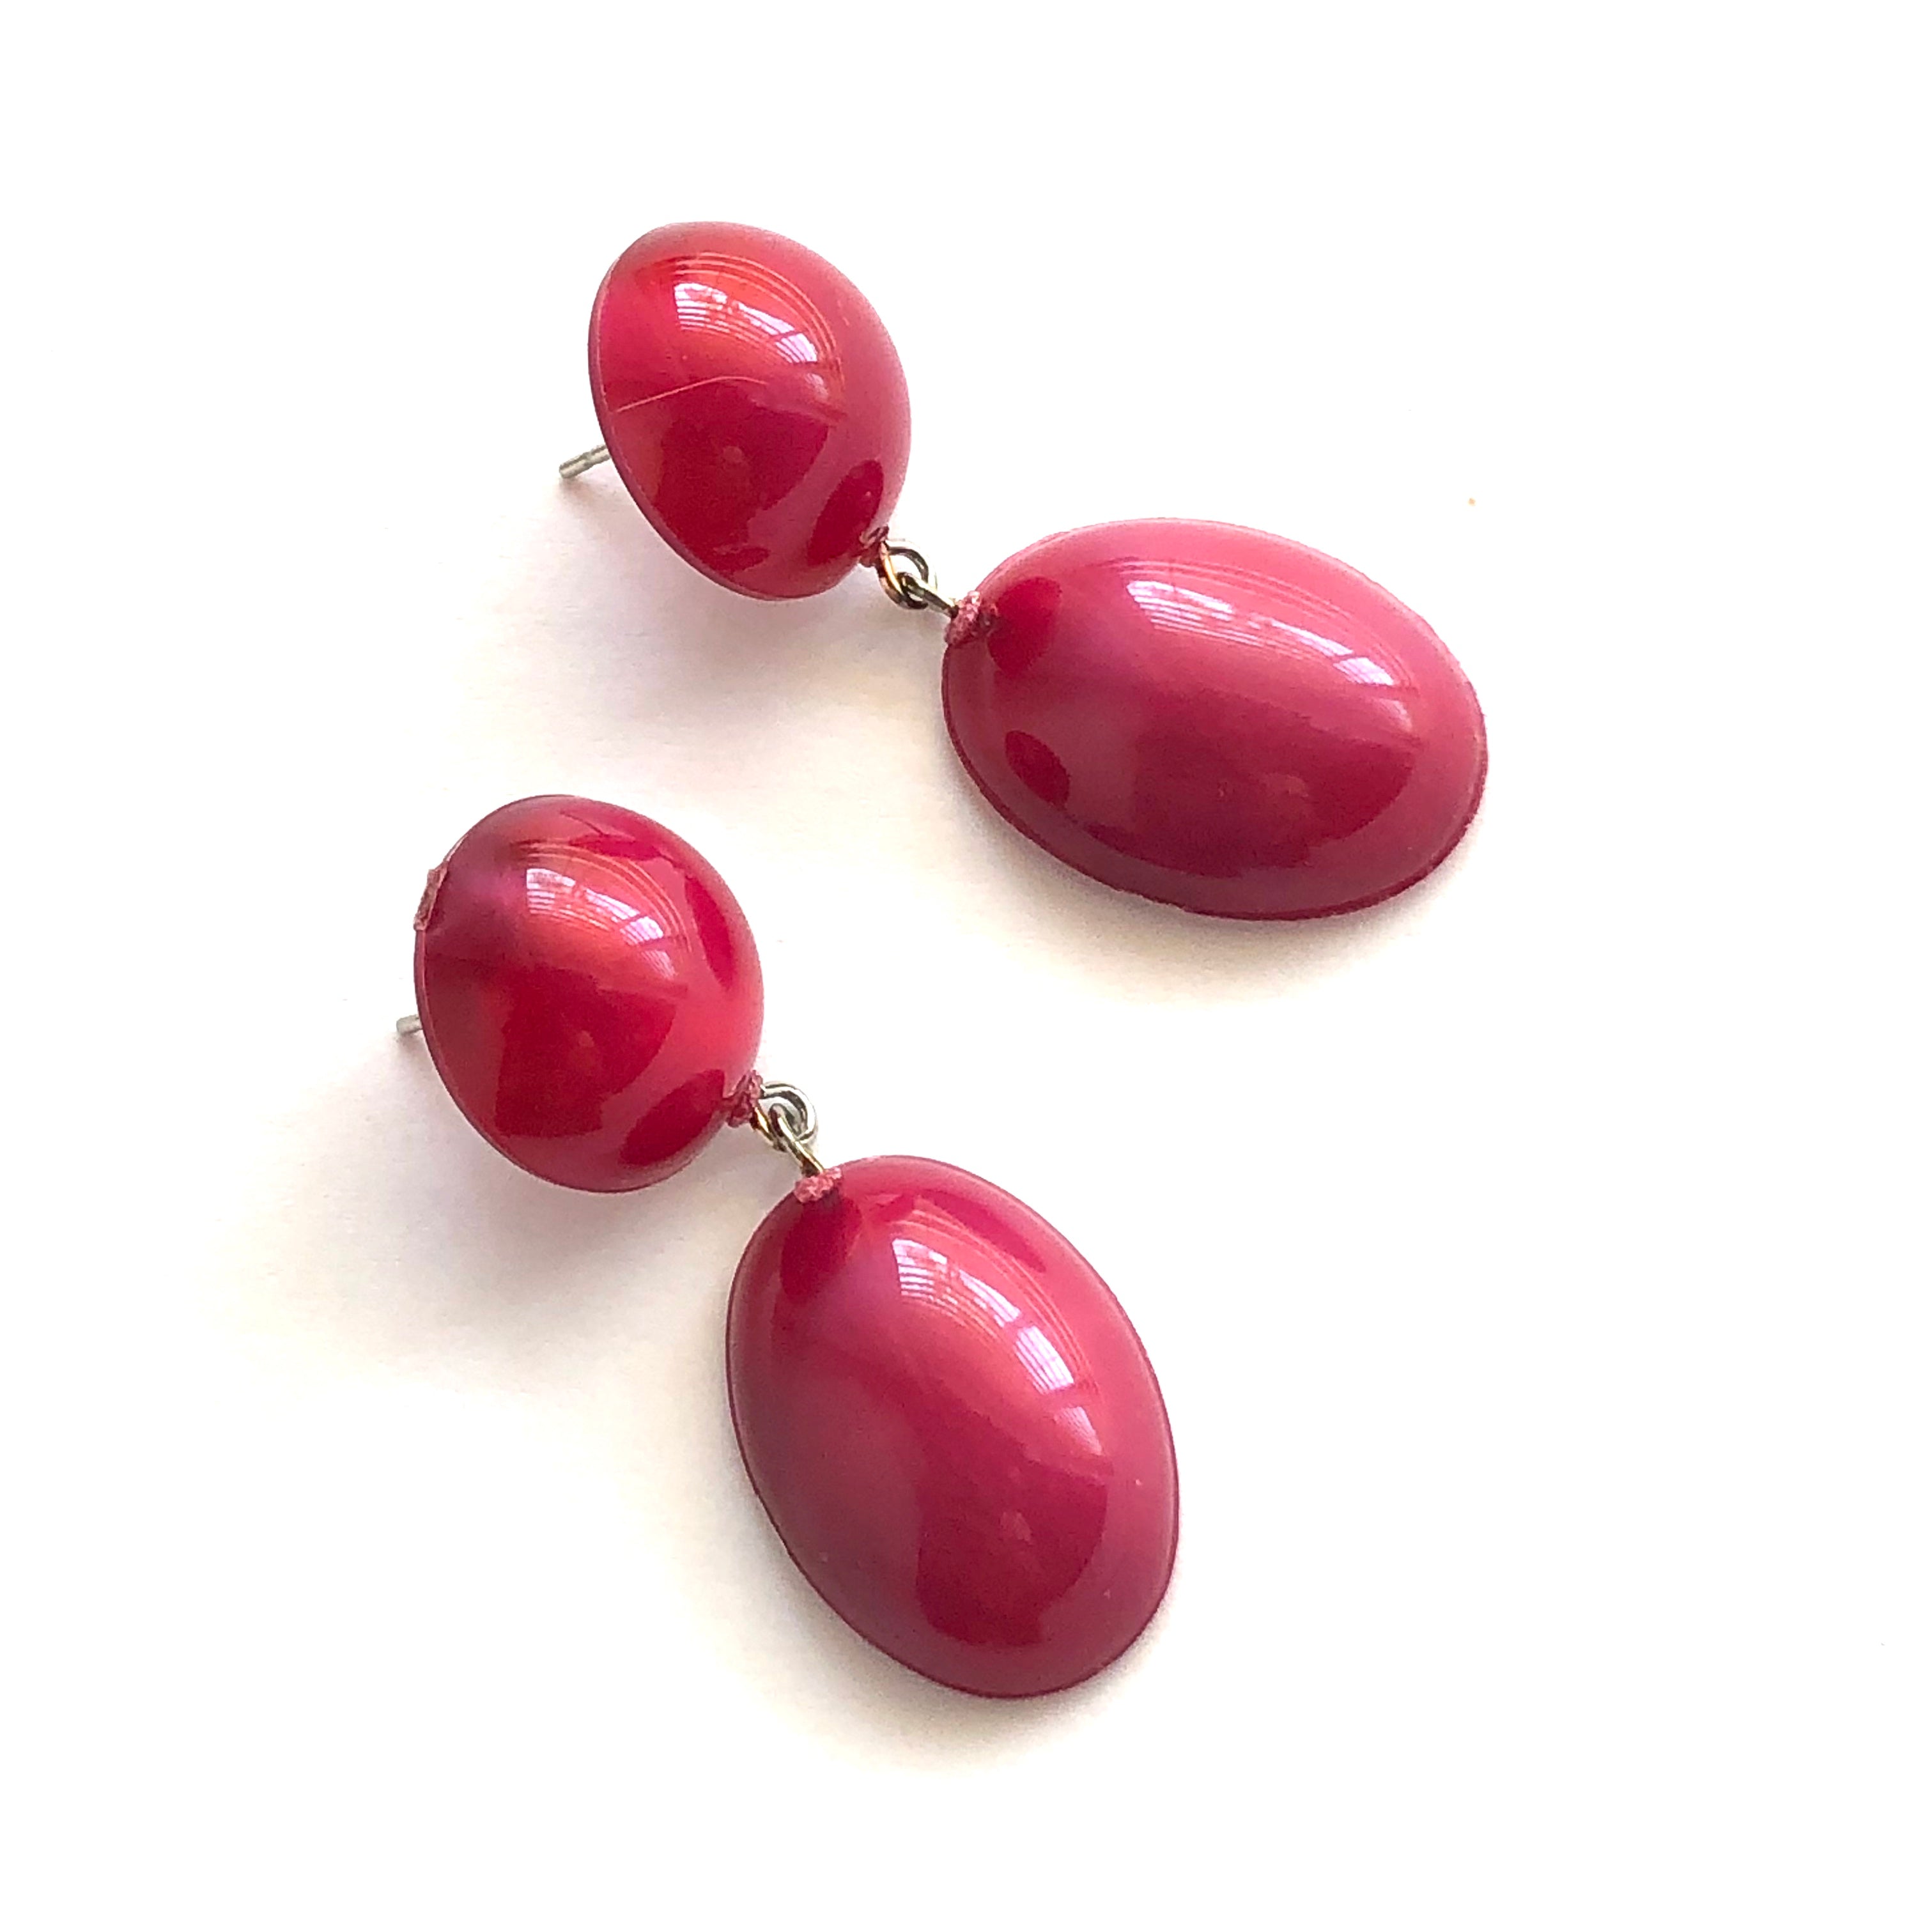 Cranberry Aura Glow Jelly Bean Earrings